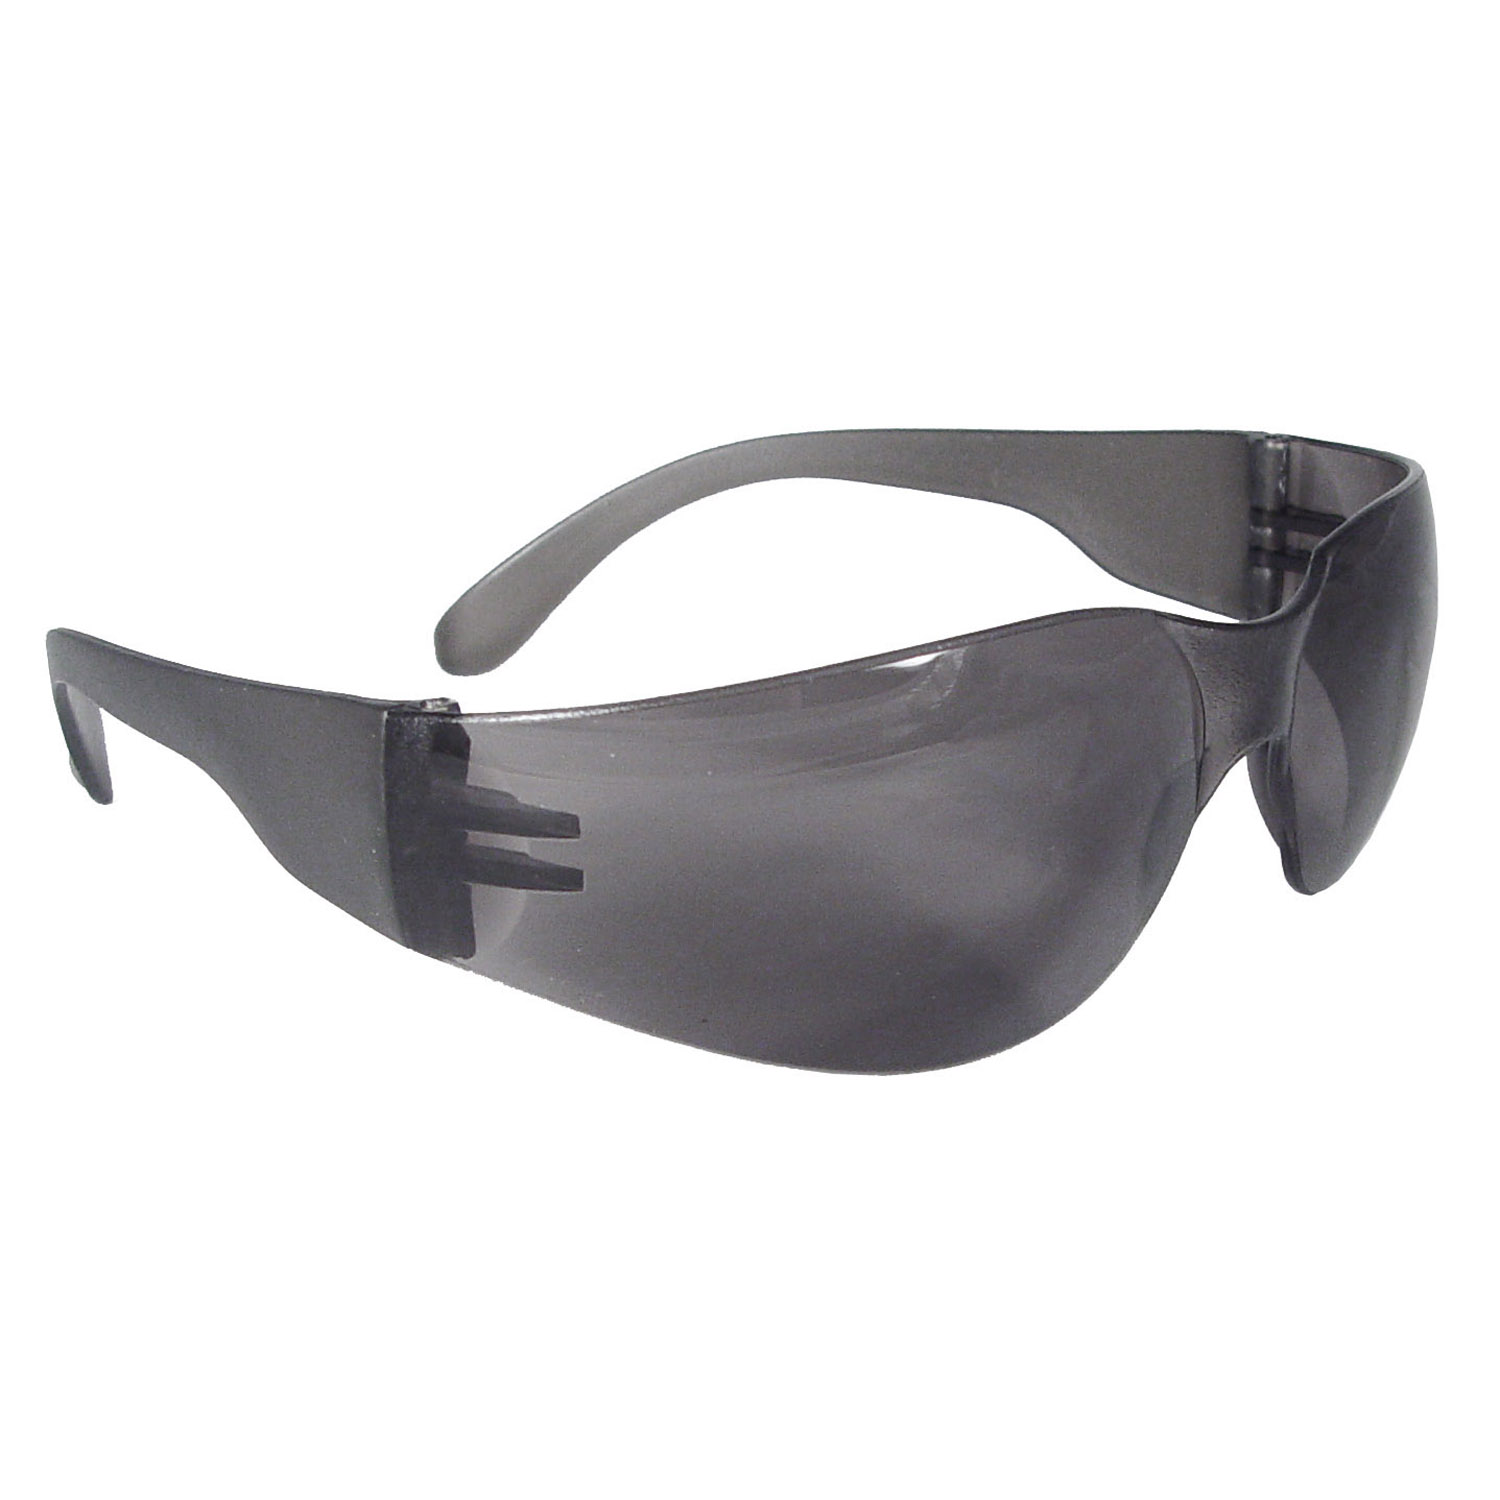 Mirage Safety Glasses-Smoke Lens